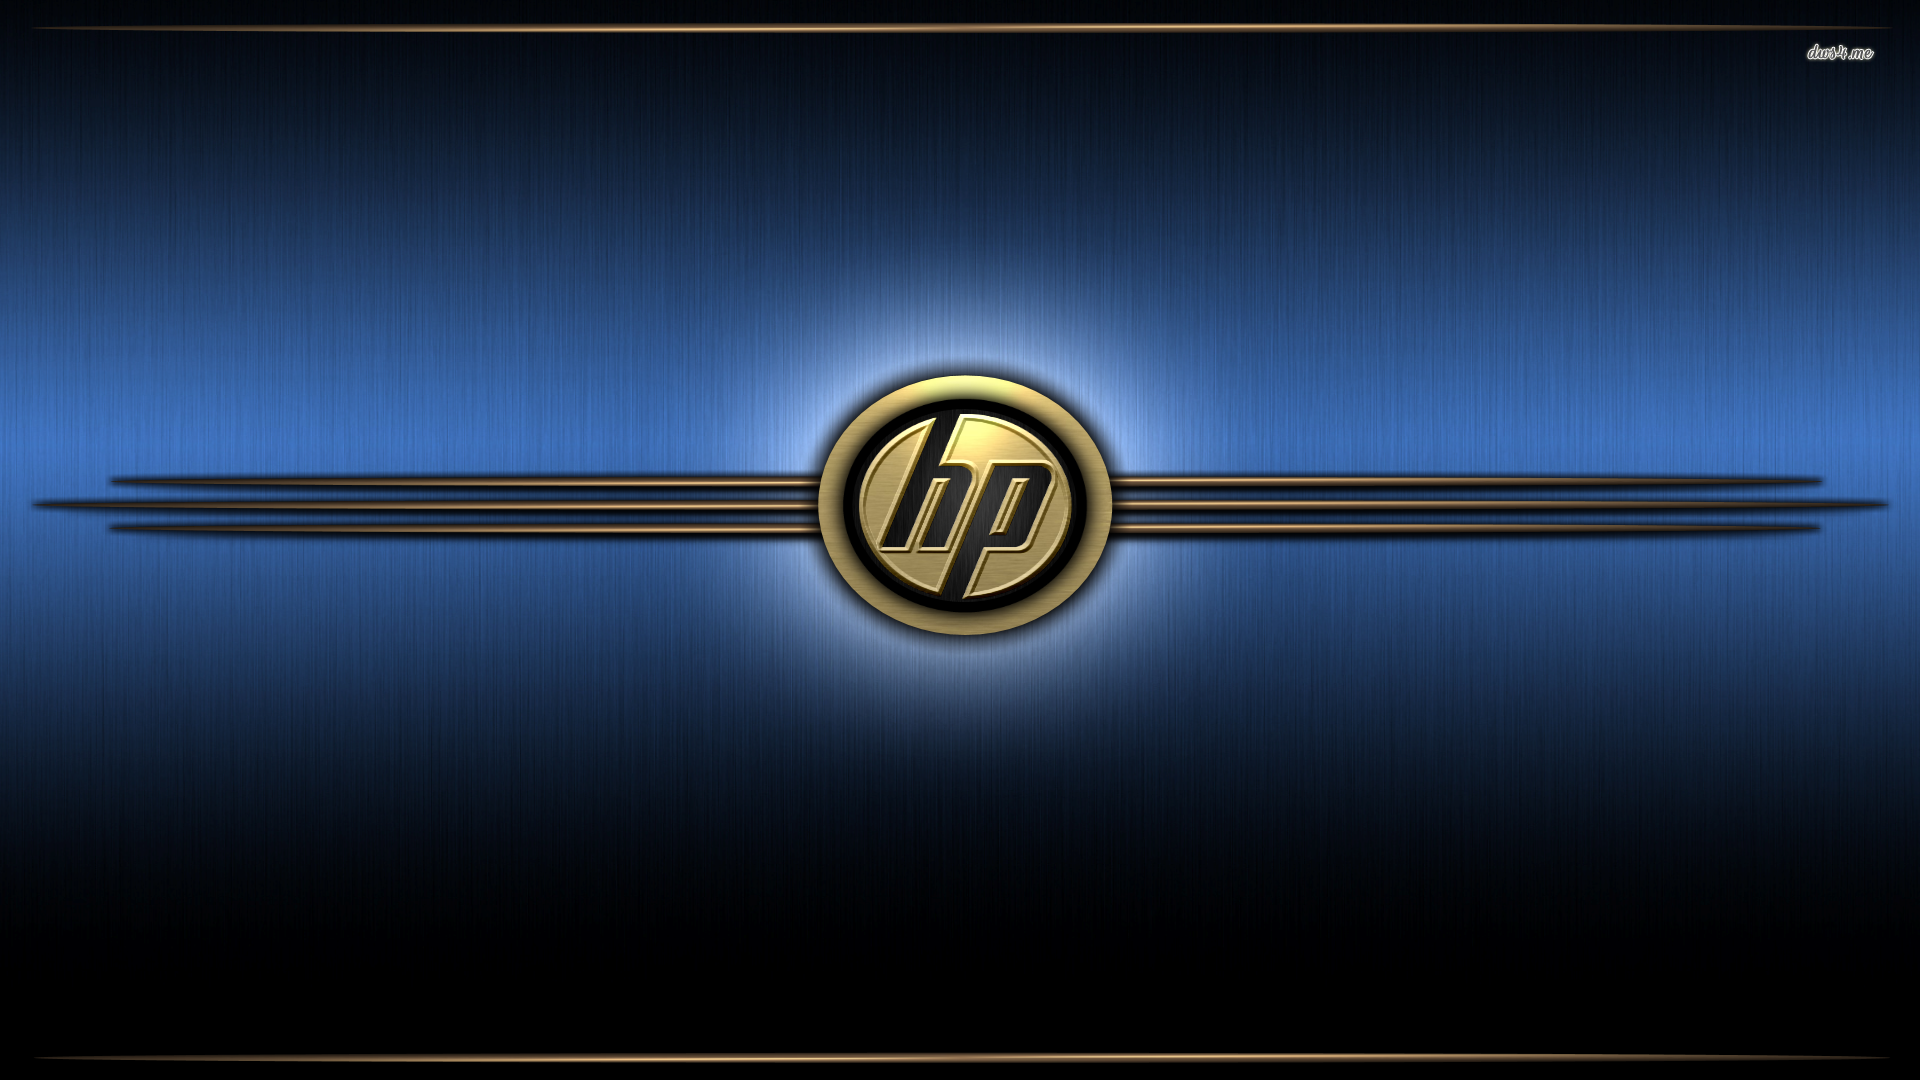 Hp logo wallpaper - Computer wallpapers - #27650